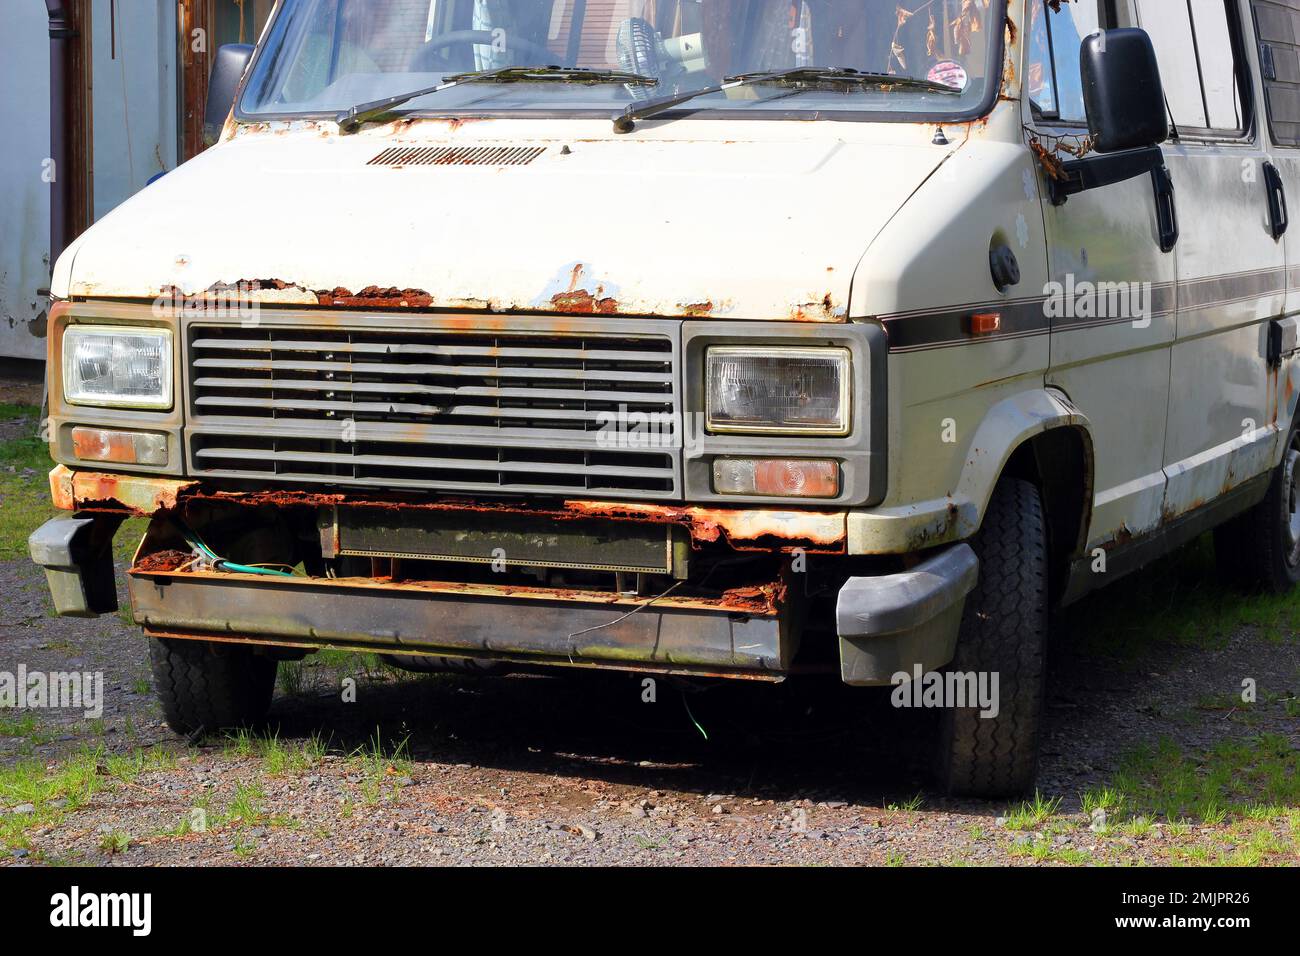 Rusty old motor vehicle. Van in very bad condition. Stock Photo